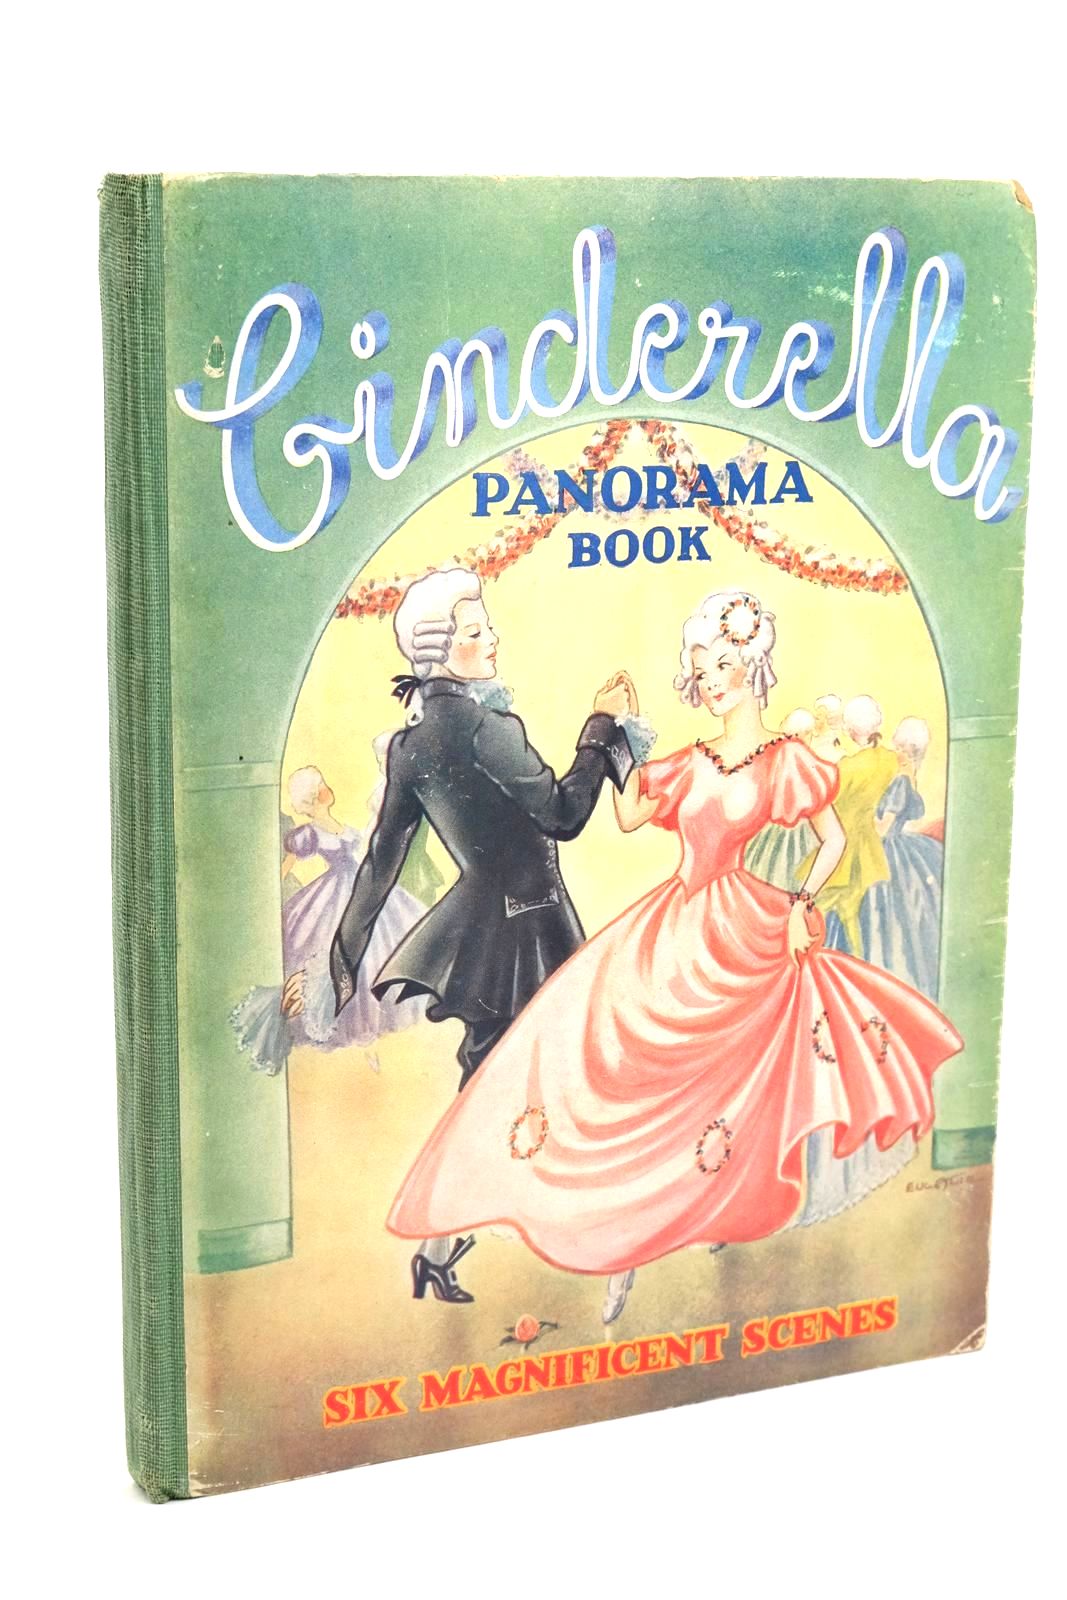 Photo of CINDERELLA PANORAMA BOOK- Stock Number: 1322242